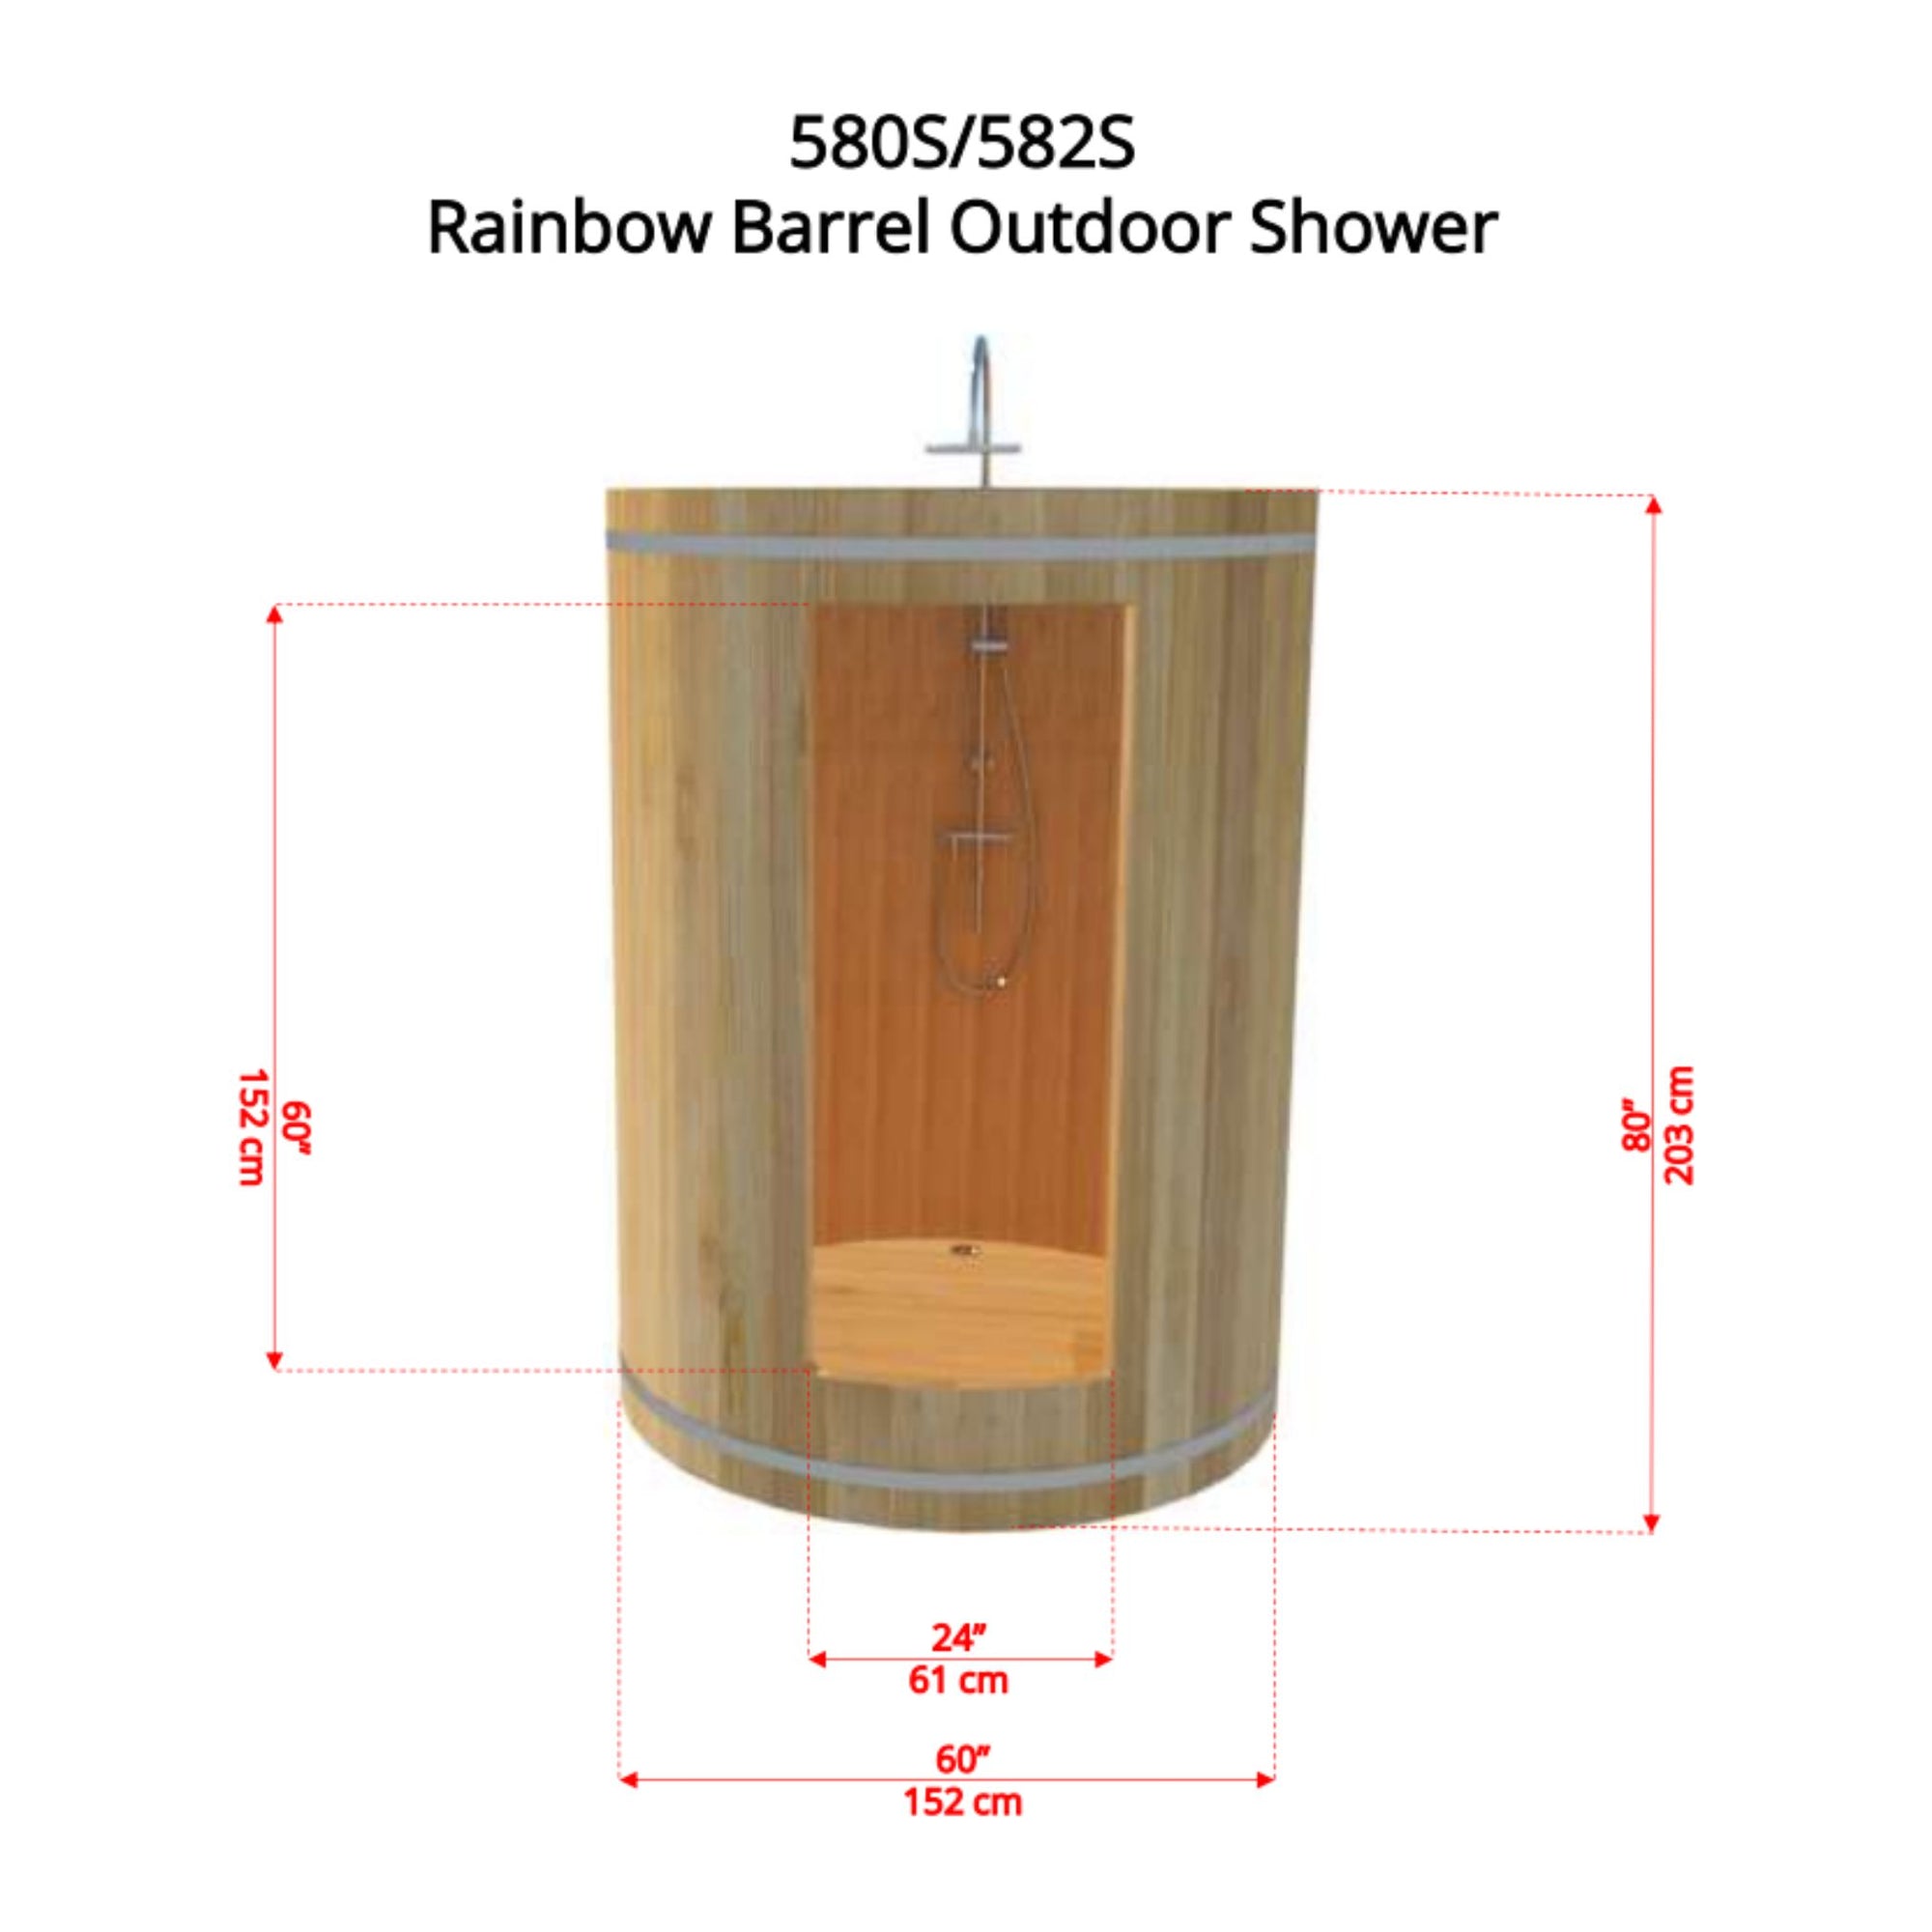 Dundalk Rainbow Barrel Outdoor Shower - Clear Red Cedar 580S